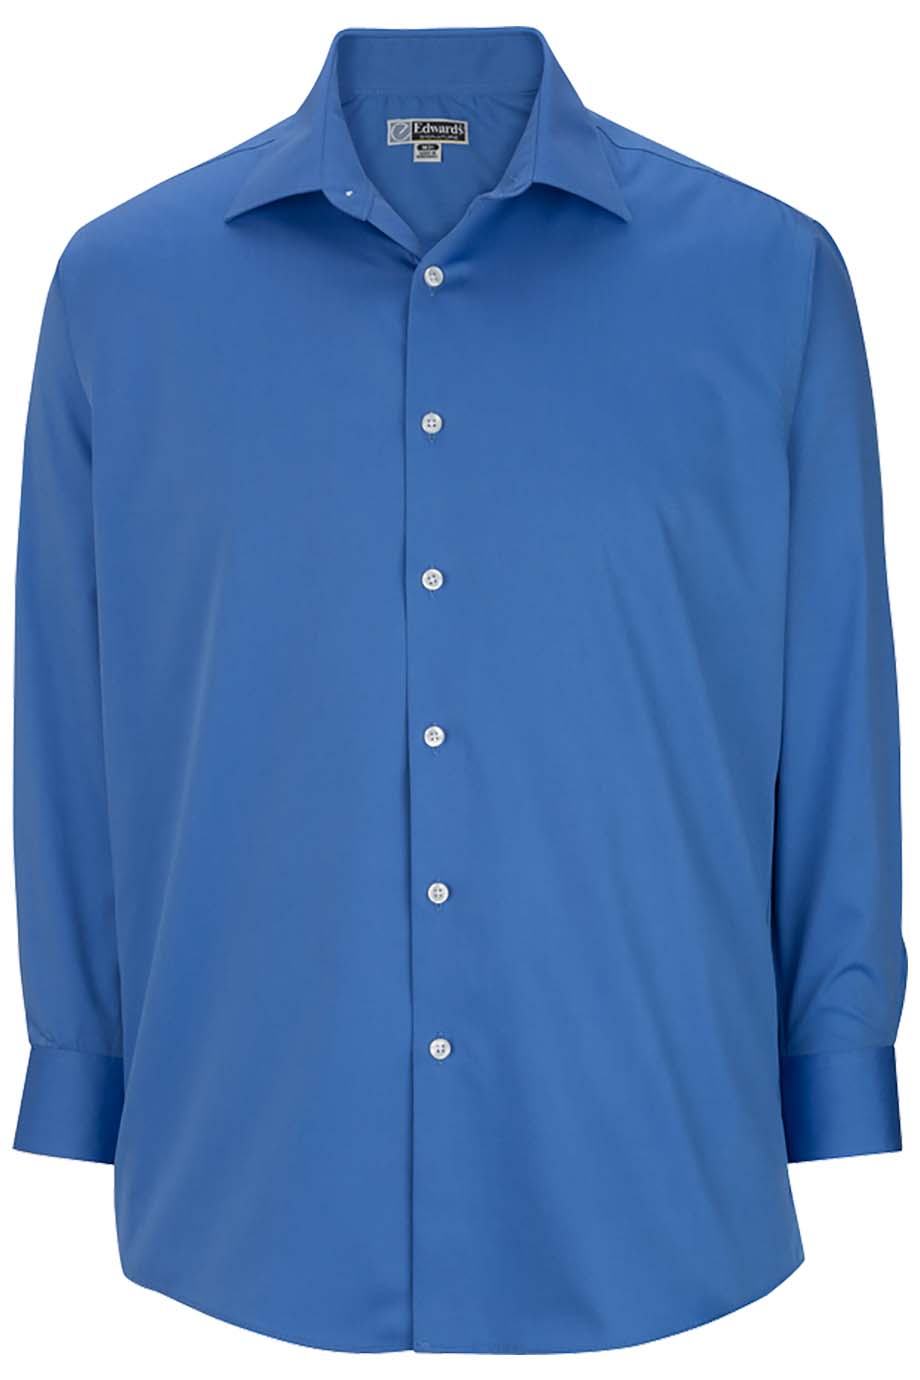 Edwards Men's Oxford Wrinkle-free Point Collar Dress Shirt - 1978